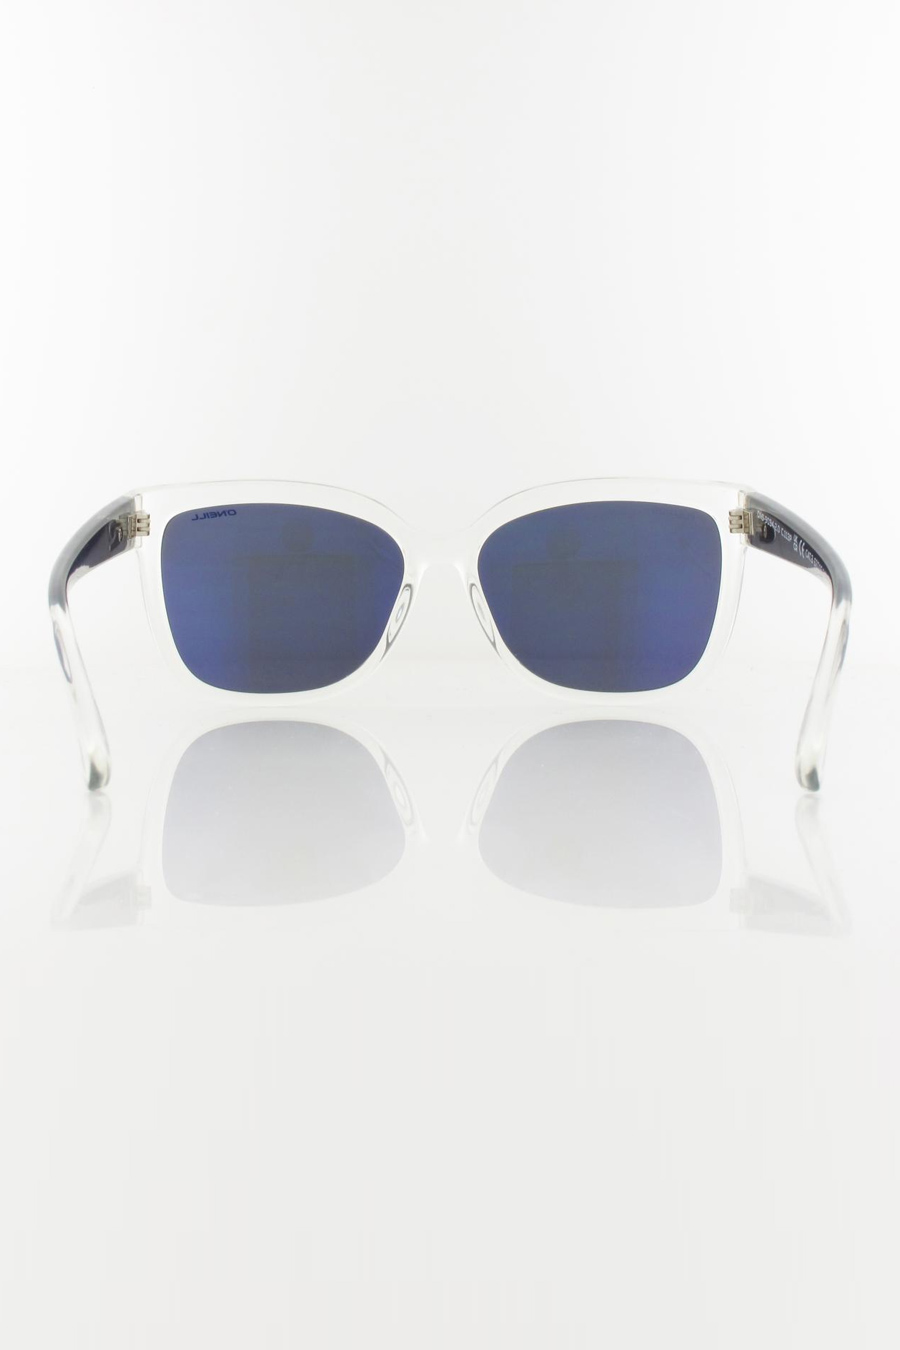 Солнечные очки ONEILL ONS-9034-20-113P